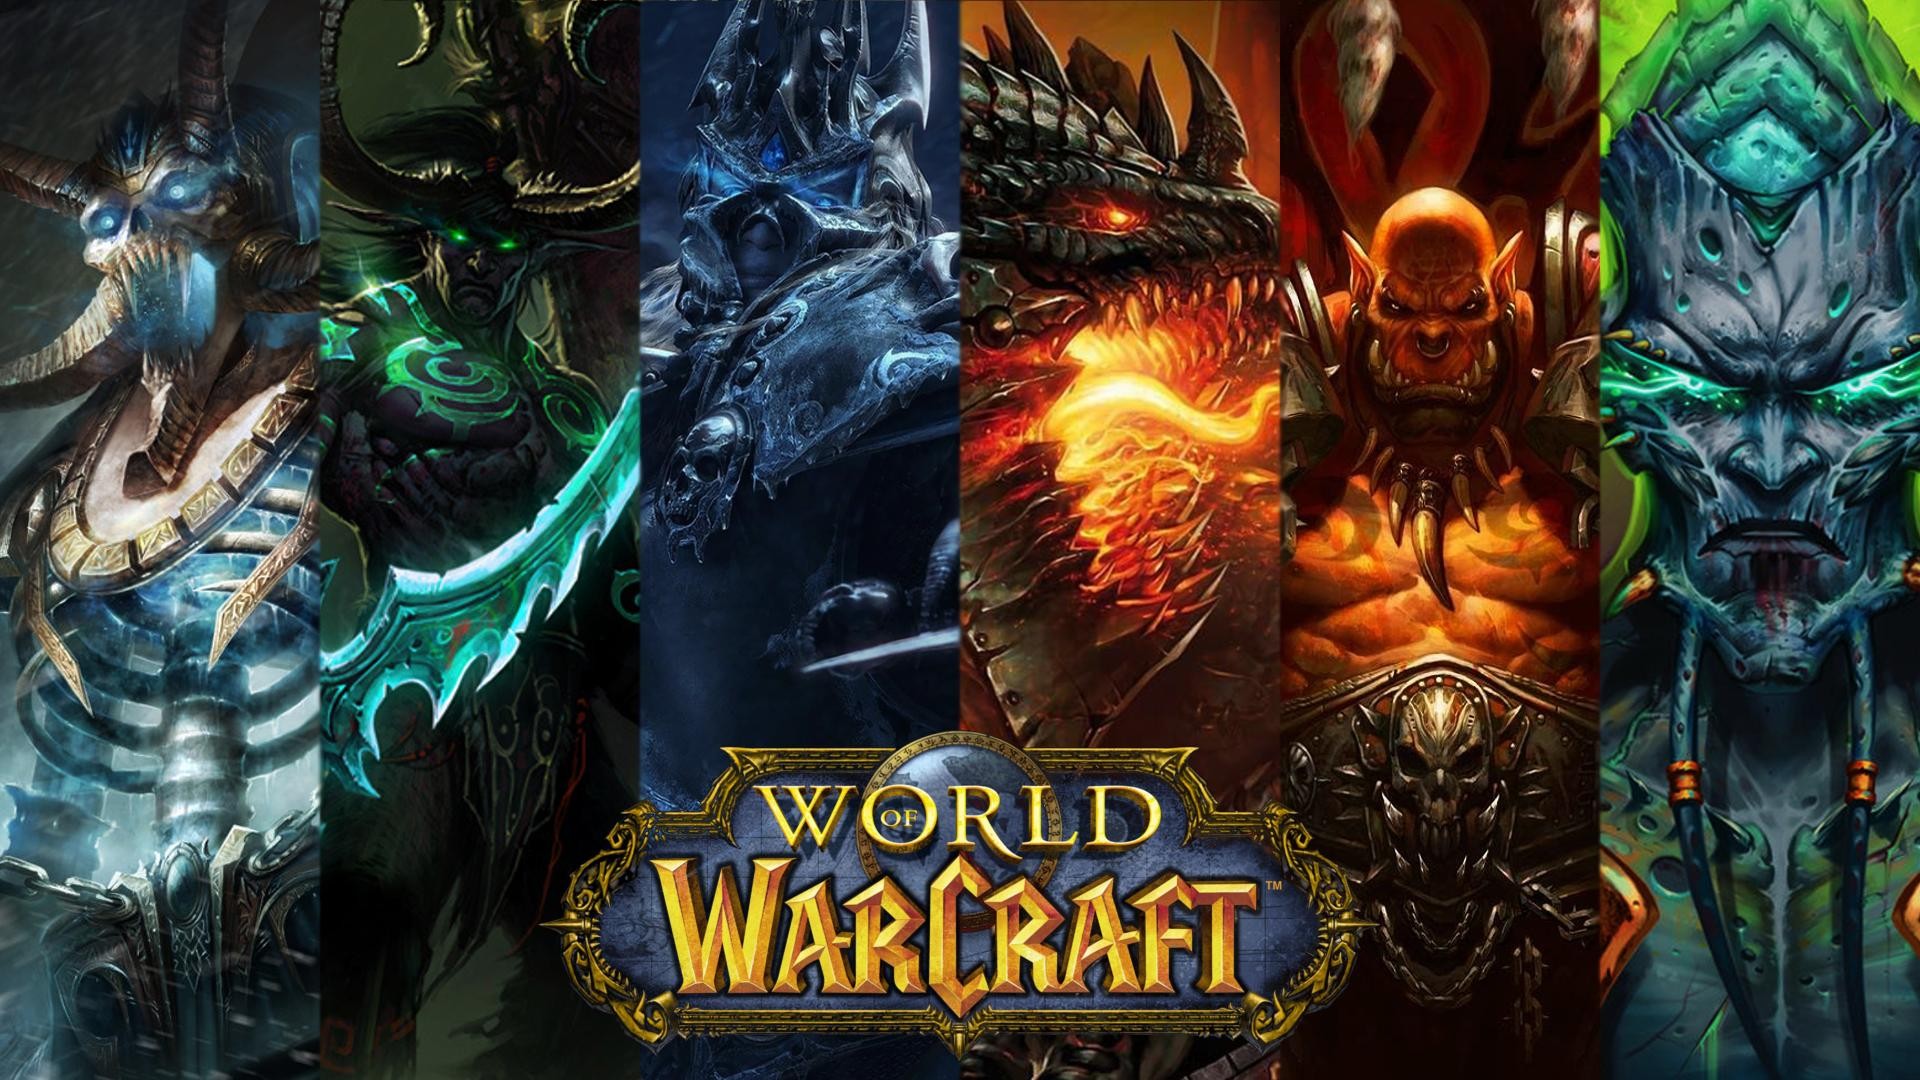 General 1920x1080 World of Warcraft video games collage PC gaming fan art Kel'Thuzad Illidan Stomrage (Warcraft) Arthas Menethil Deathwing Garrosh Hellscream Archimonde